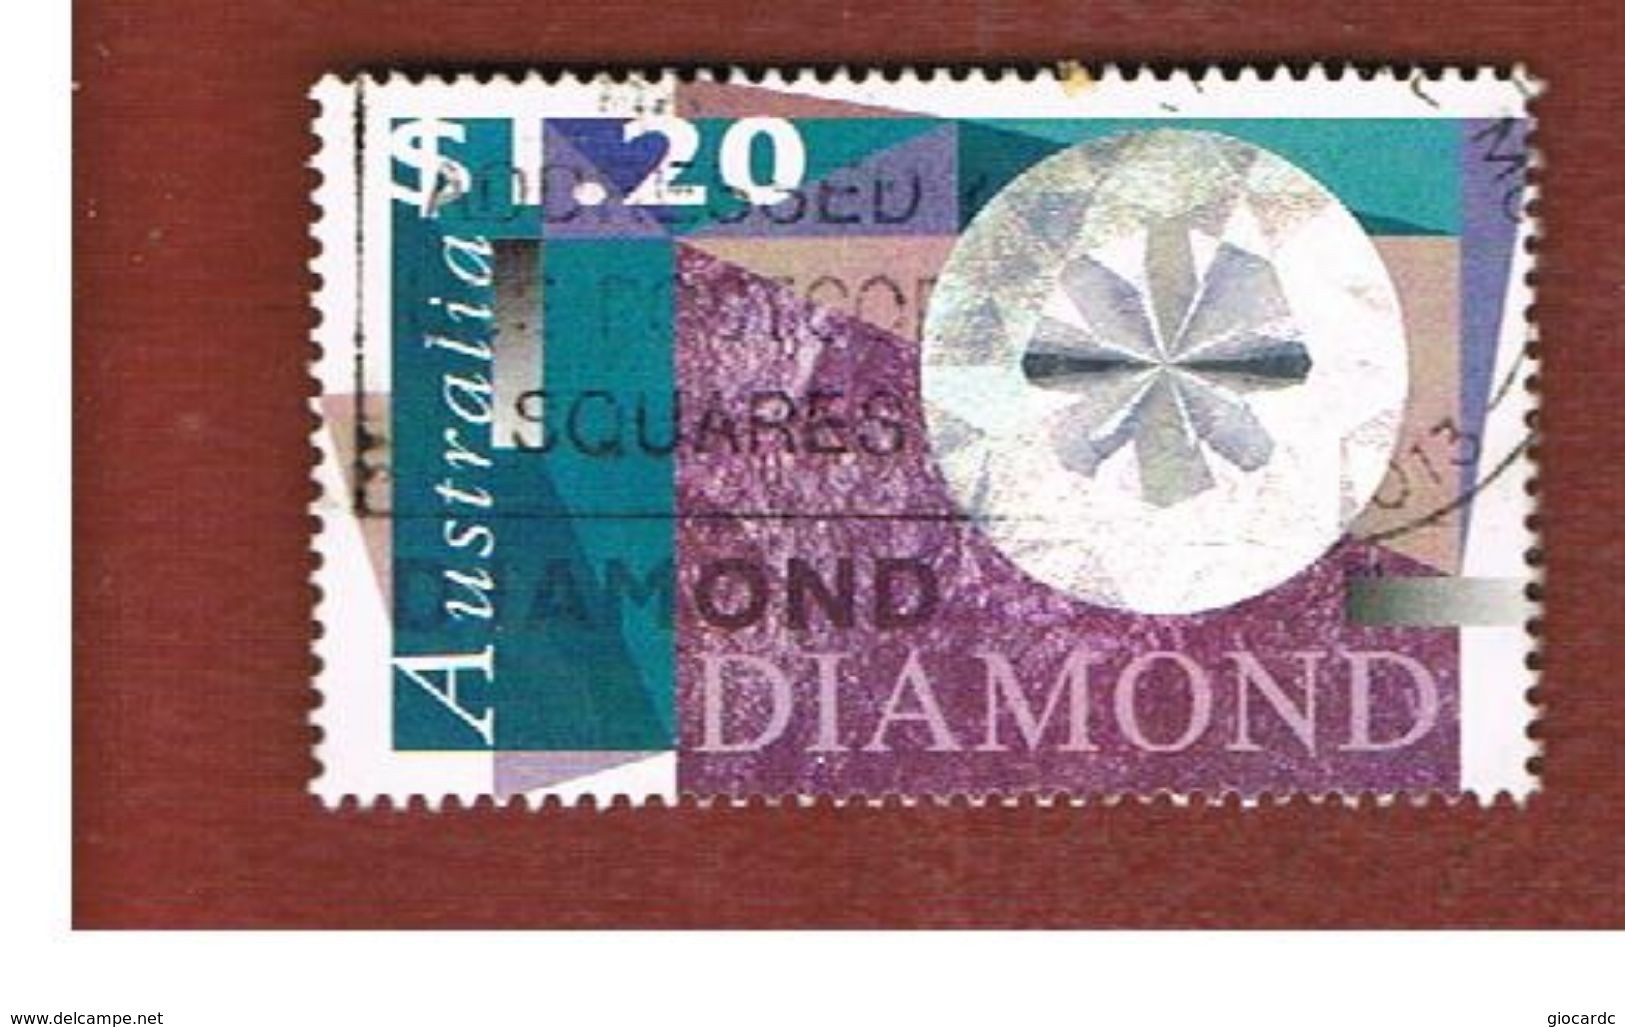 AUSTRALIA  -  SG 1642 -      1996  DIAMOND  -       USED - Gebraucht